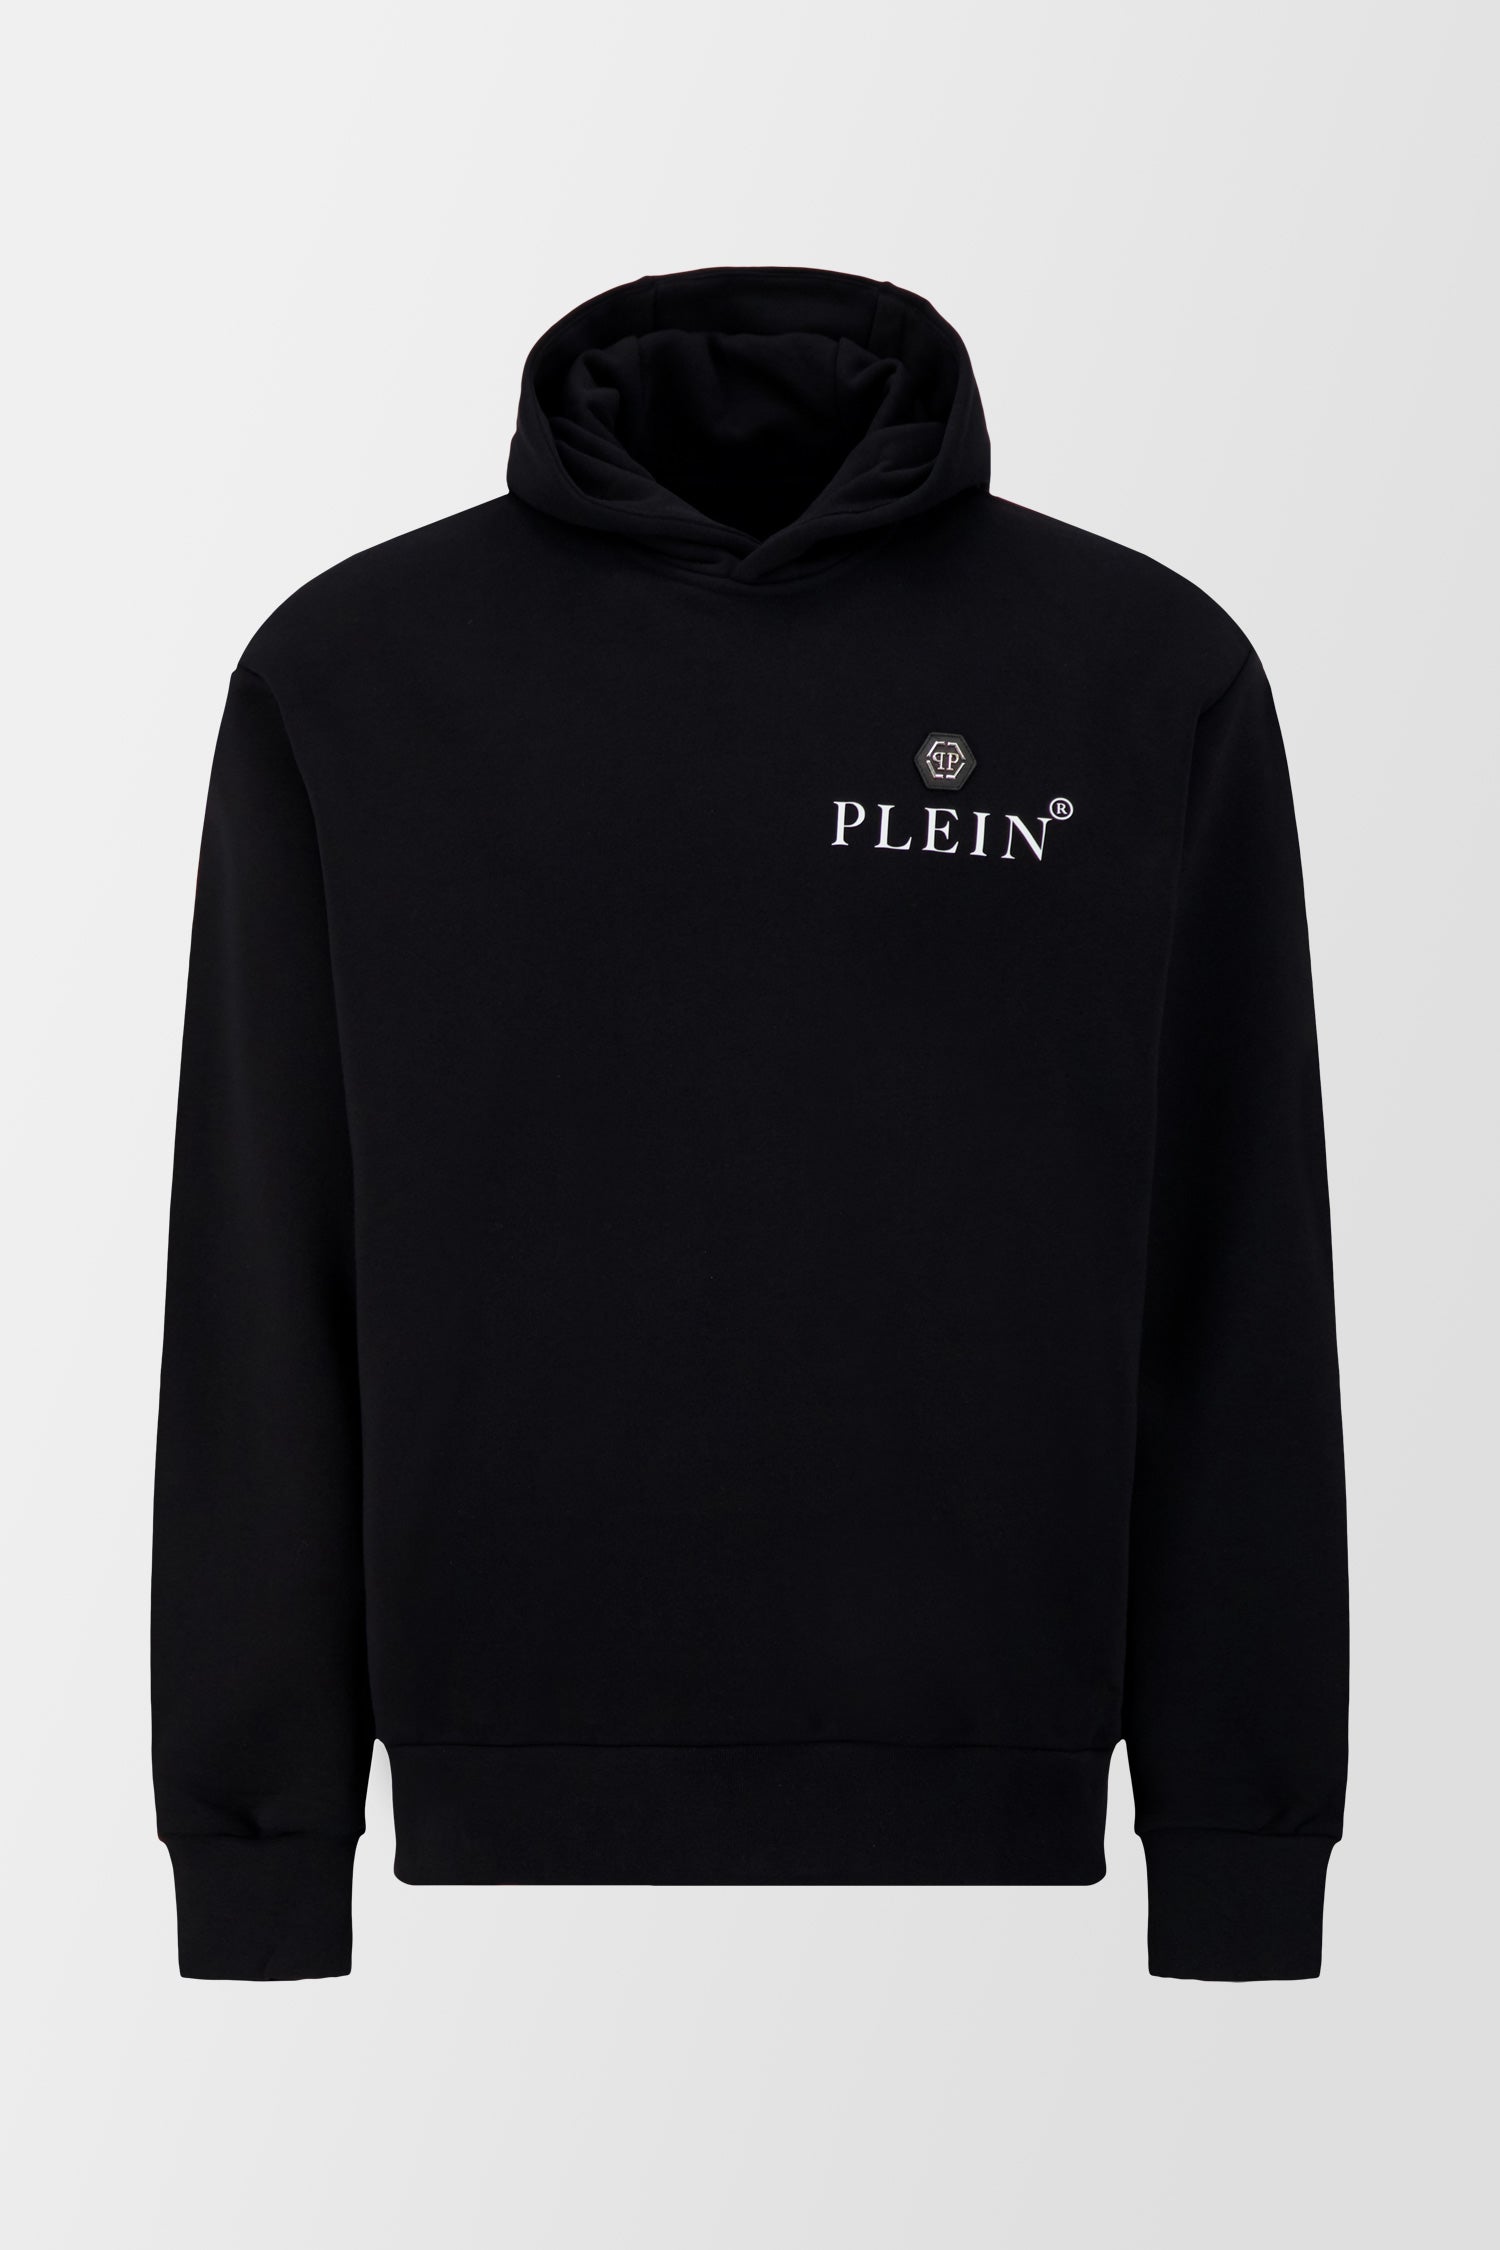 Philipp Plein Black Hexagon Hoodie Sweatshirt